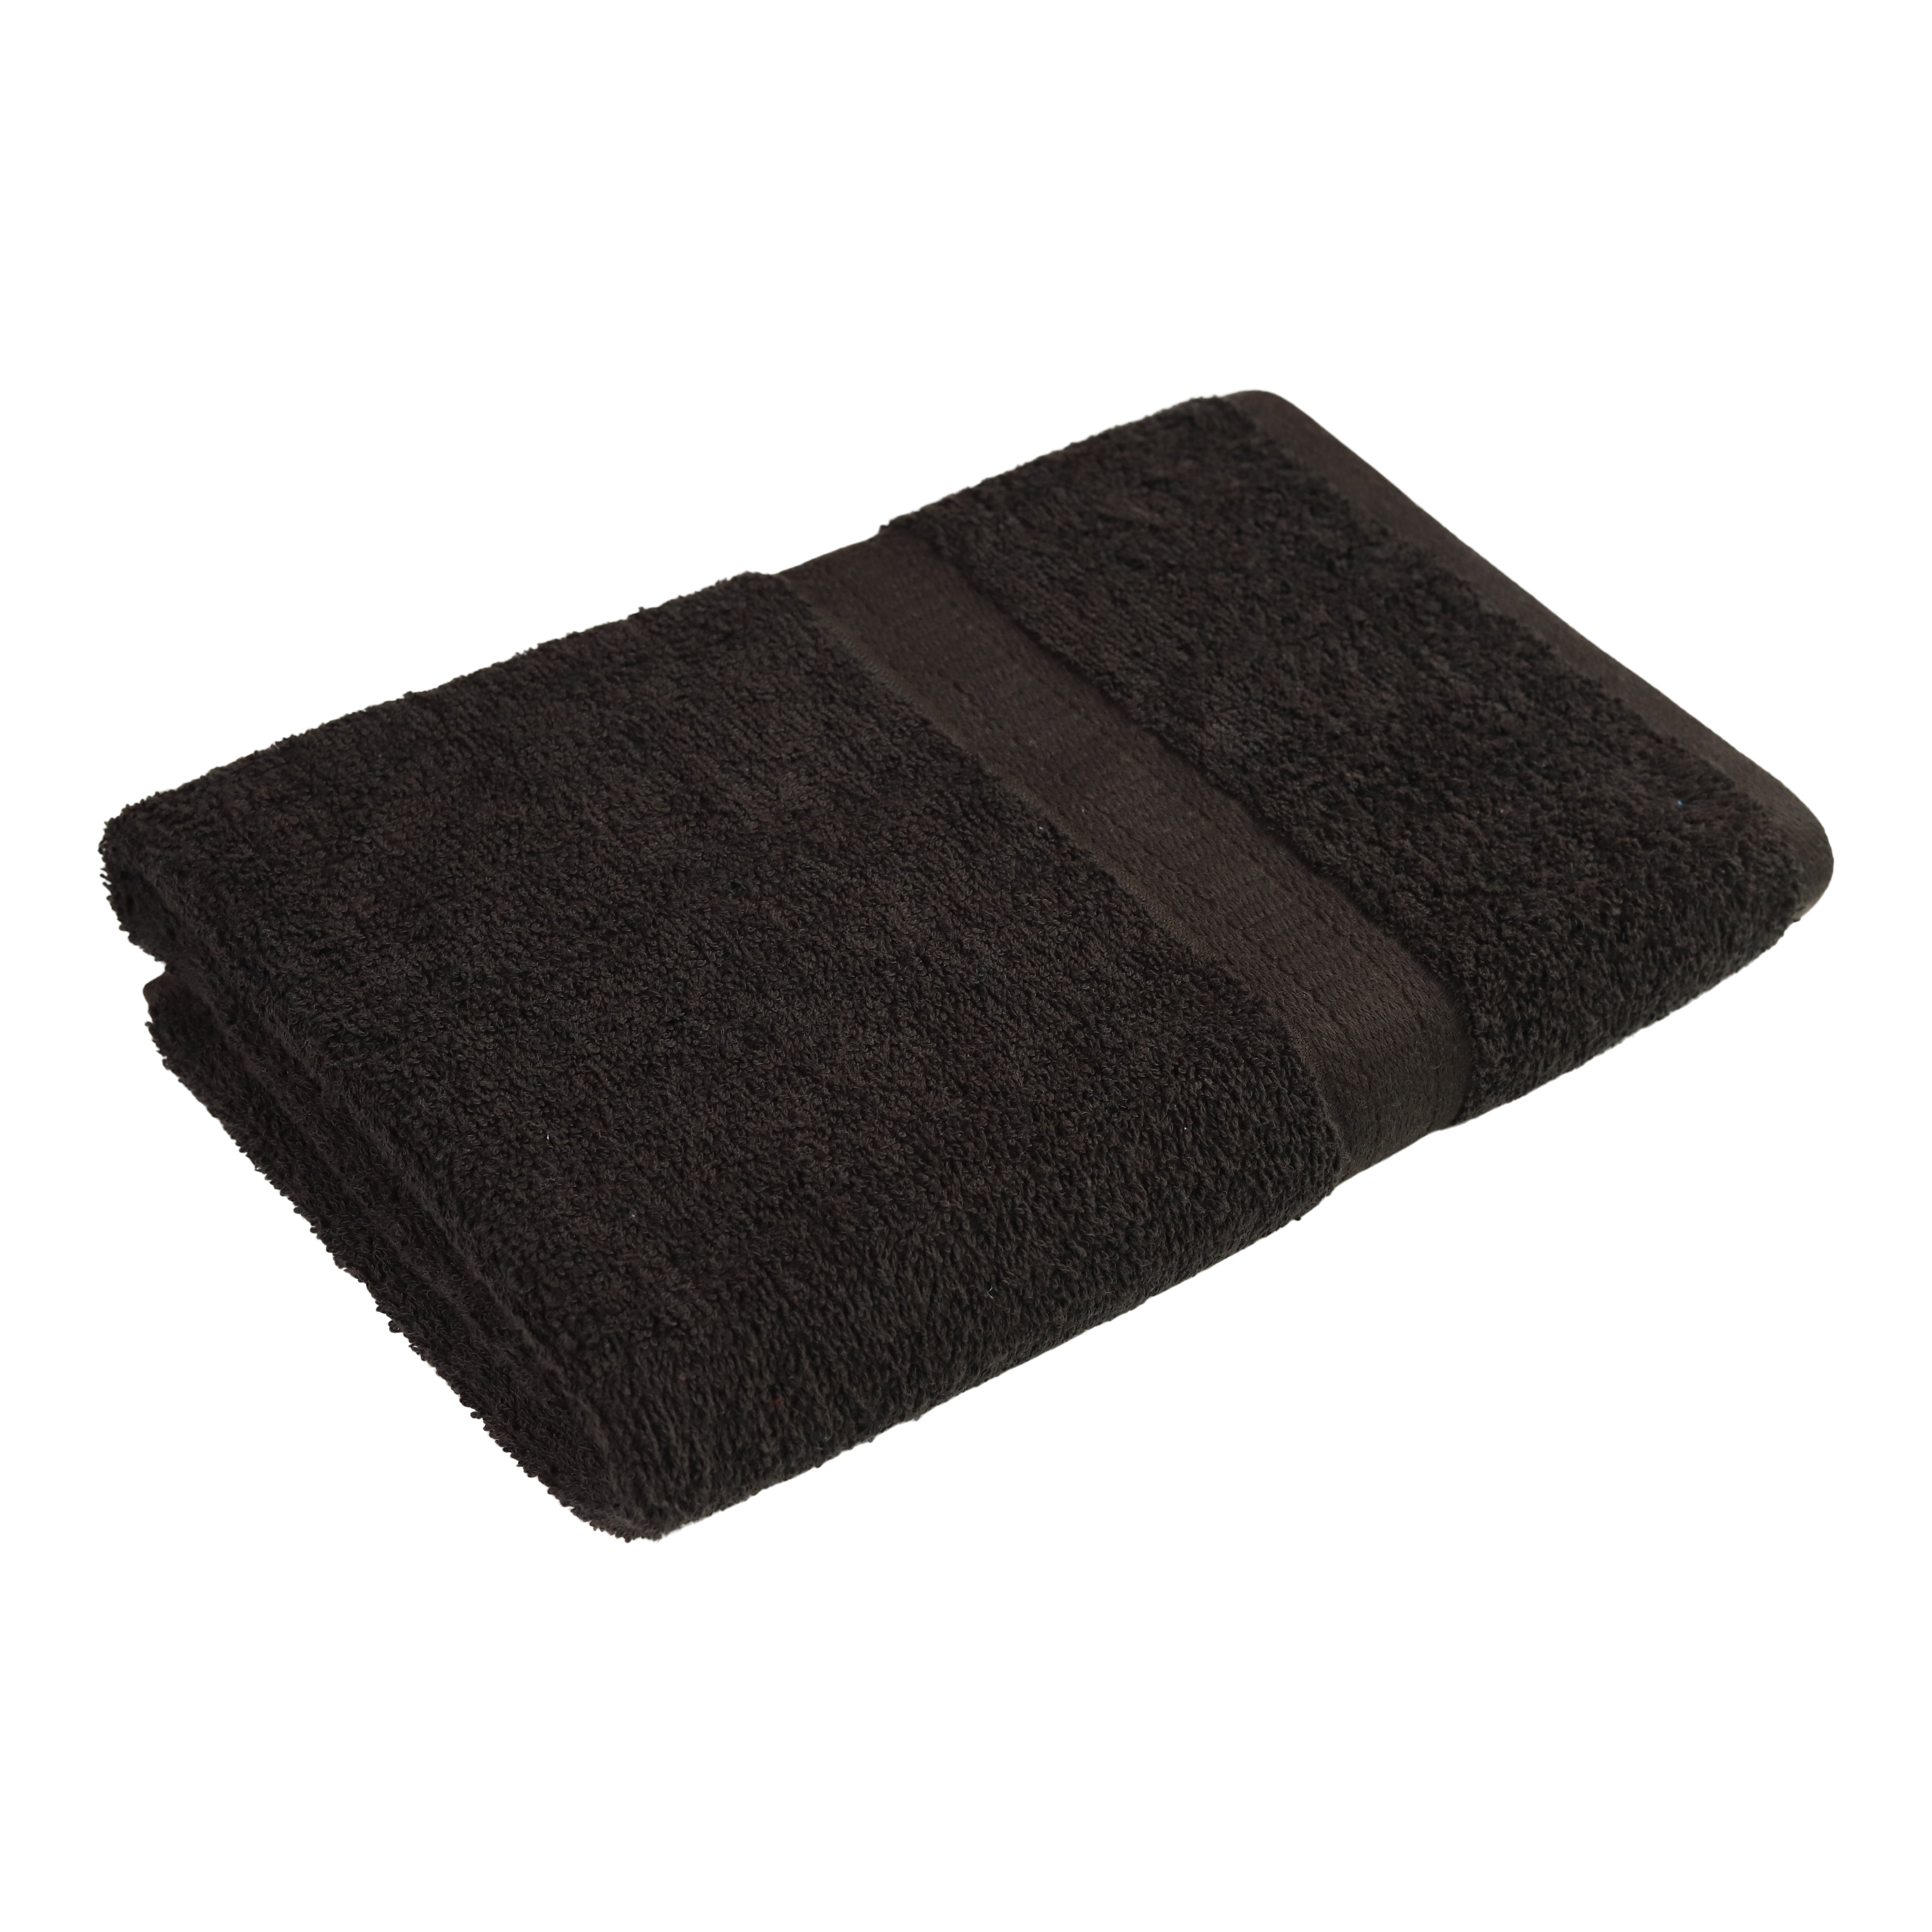 Mainstays Solid Bath Towel, Rich Black - image 2 of 9